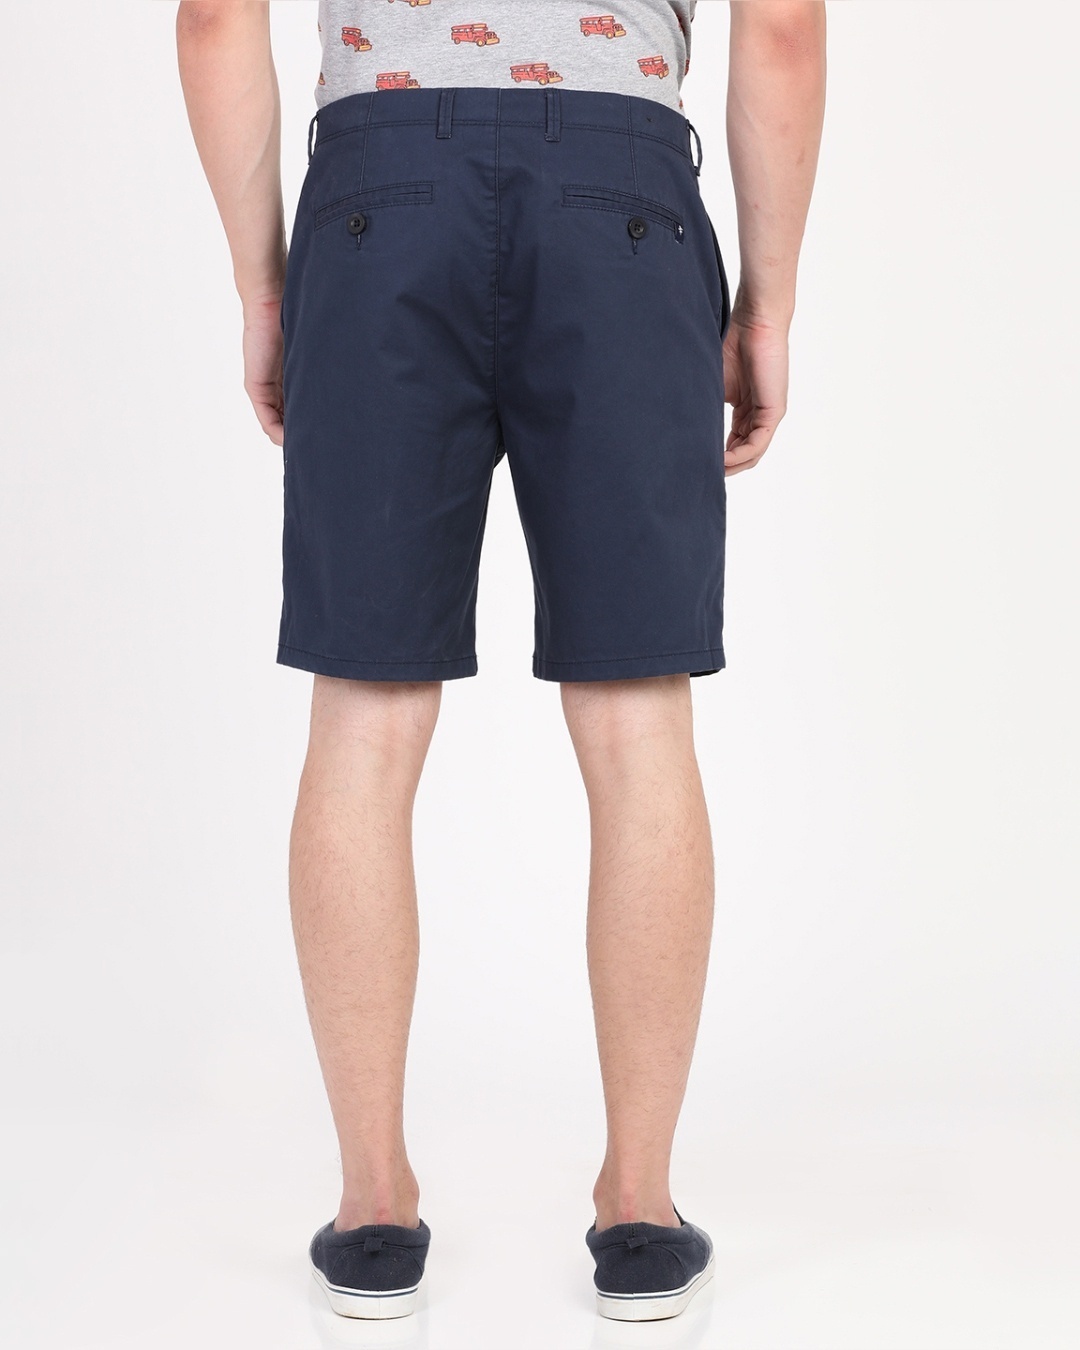 Buy Men's Blue Cotton Shorts for Men Blue Online at Bewakoof